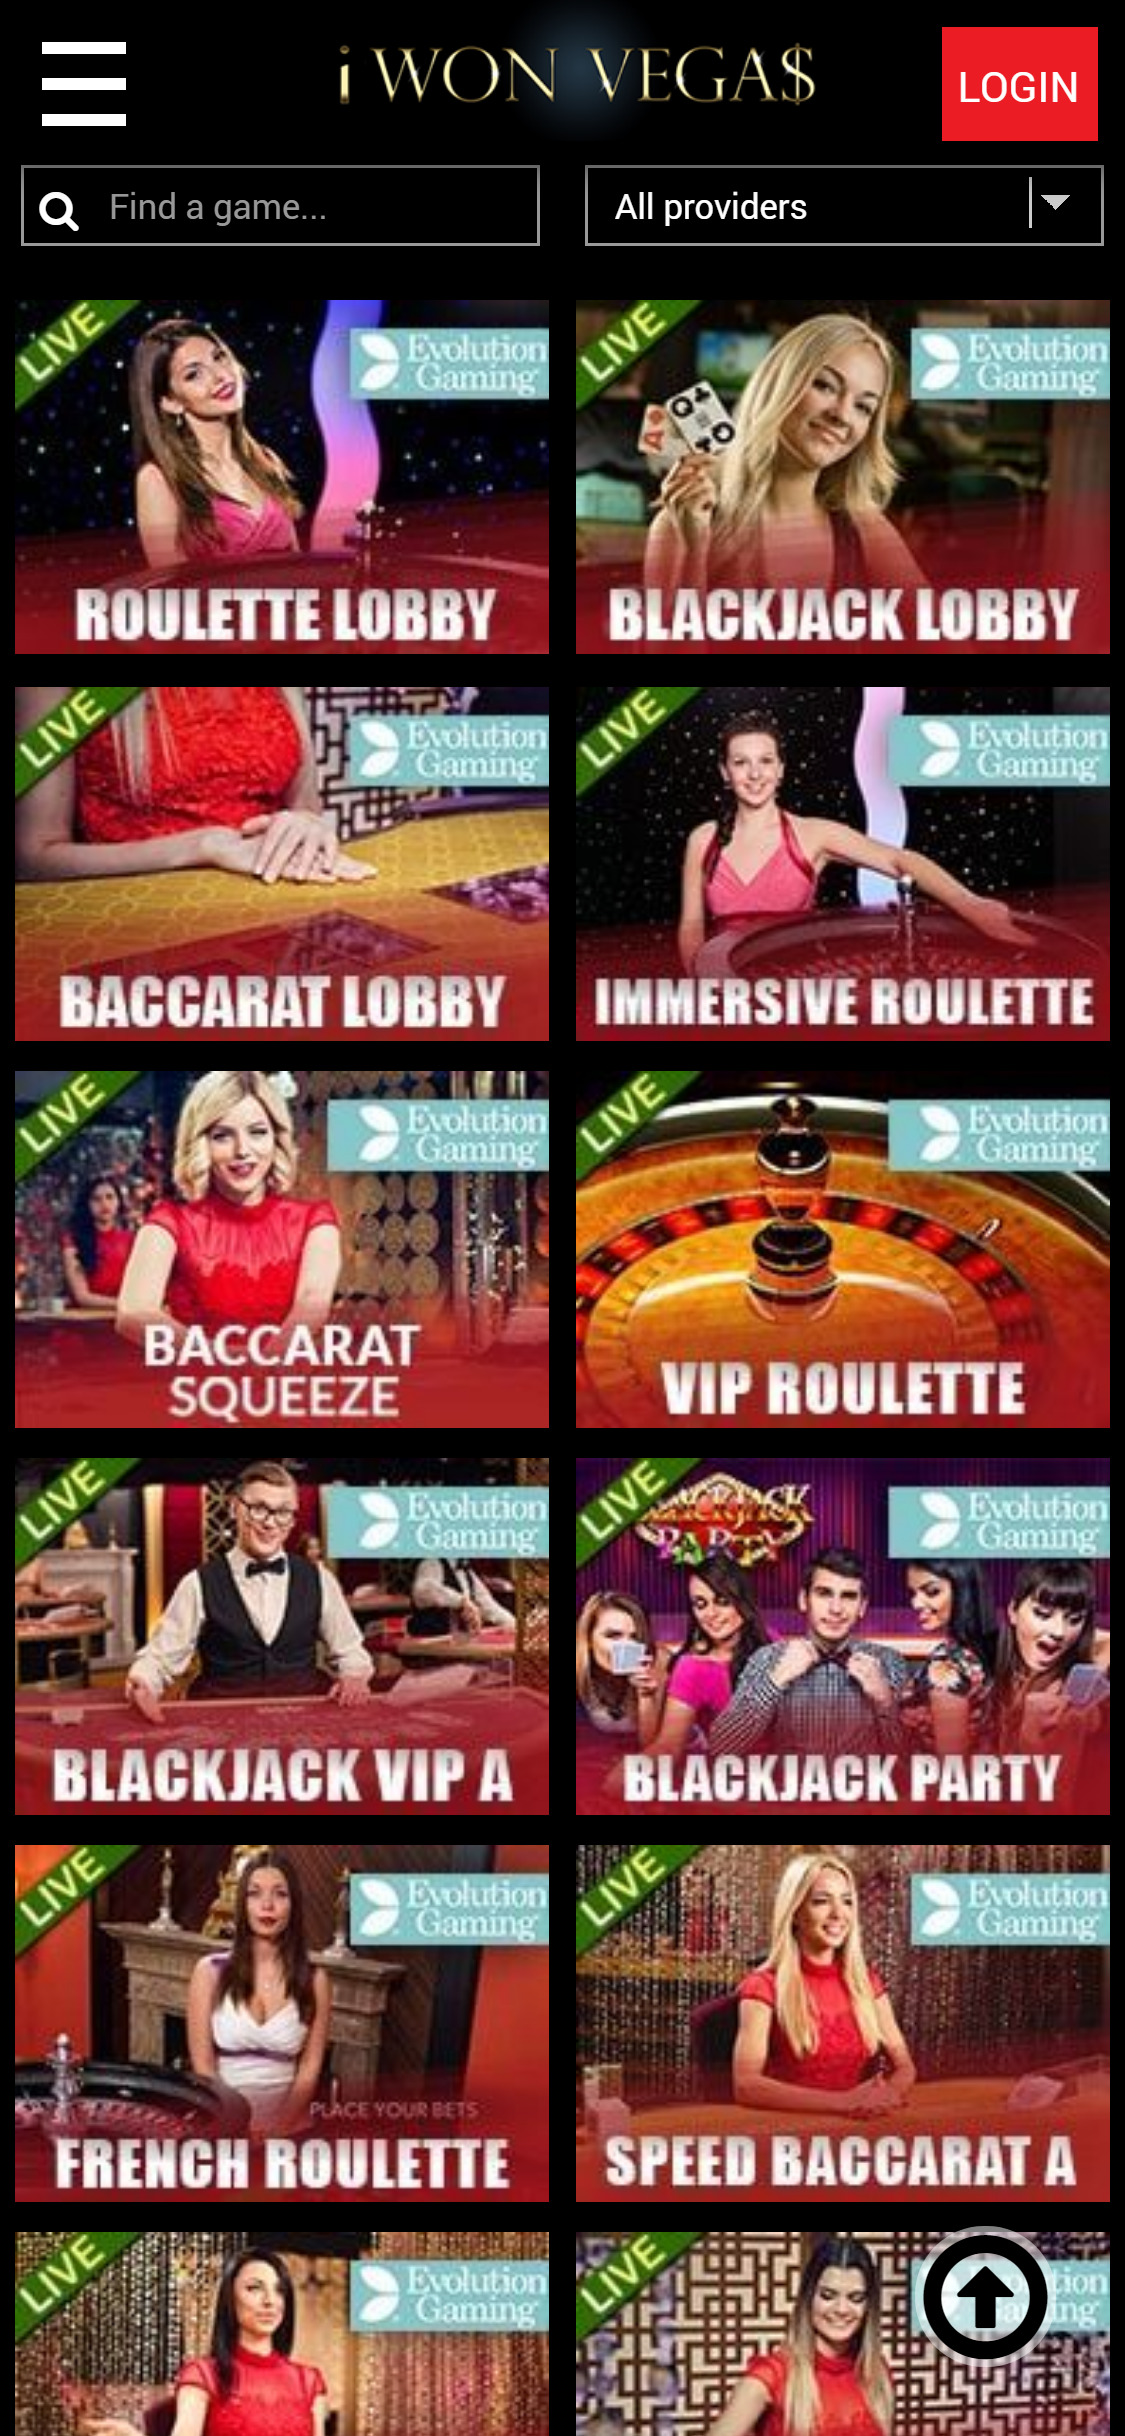 iWonVegas Casino Mobile Live Dealer Games Review